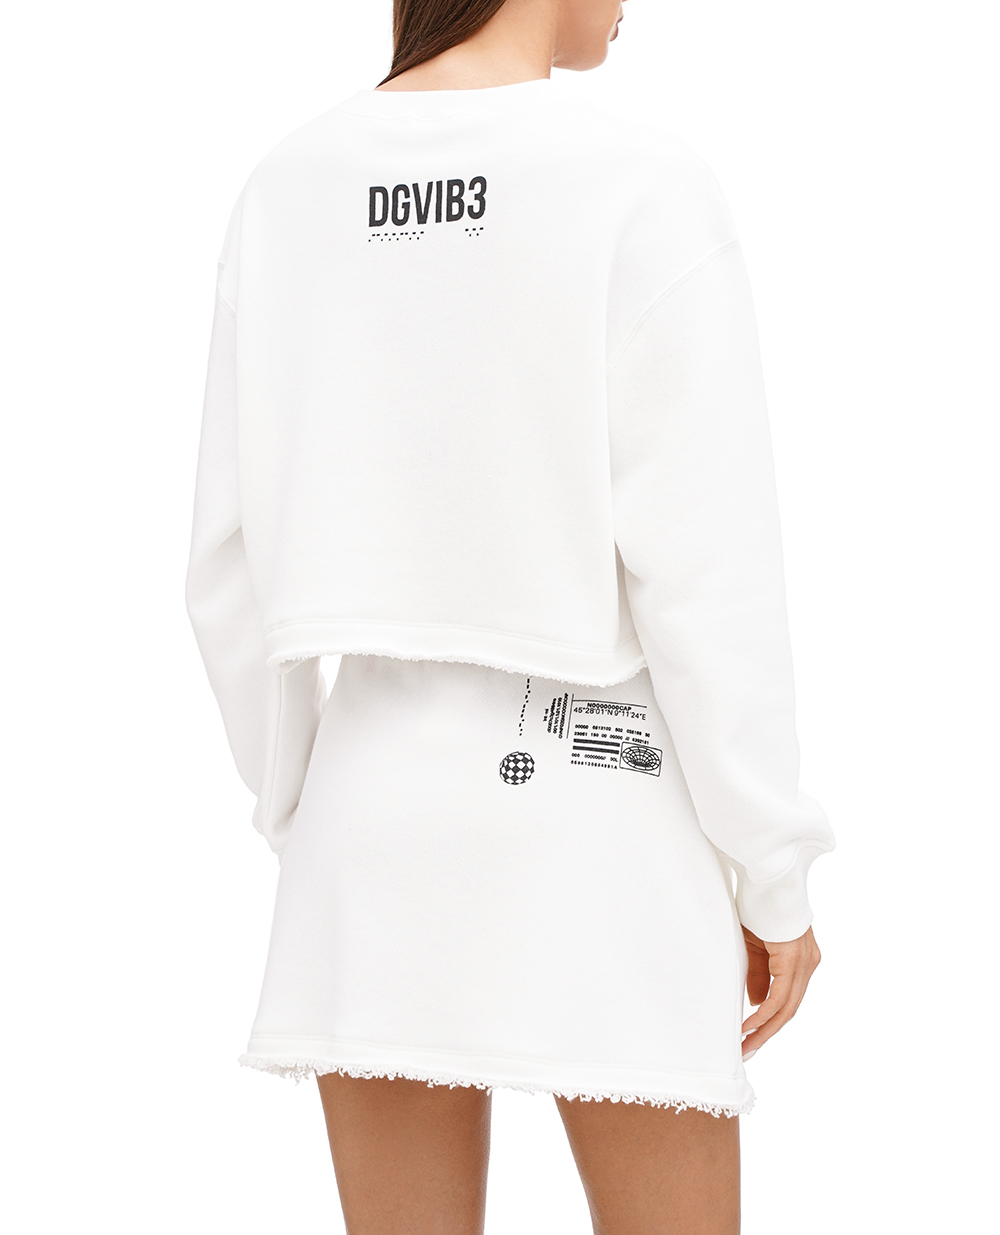 Свитшот DGVIB3 (костюм) Dolce&Gabbana F9R41T-G7K6T, белый цвет • Купить в интернет-магазине Kameron